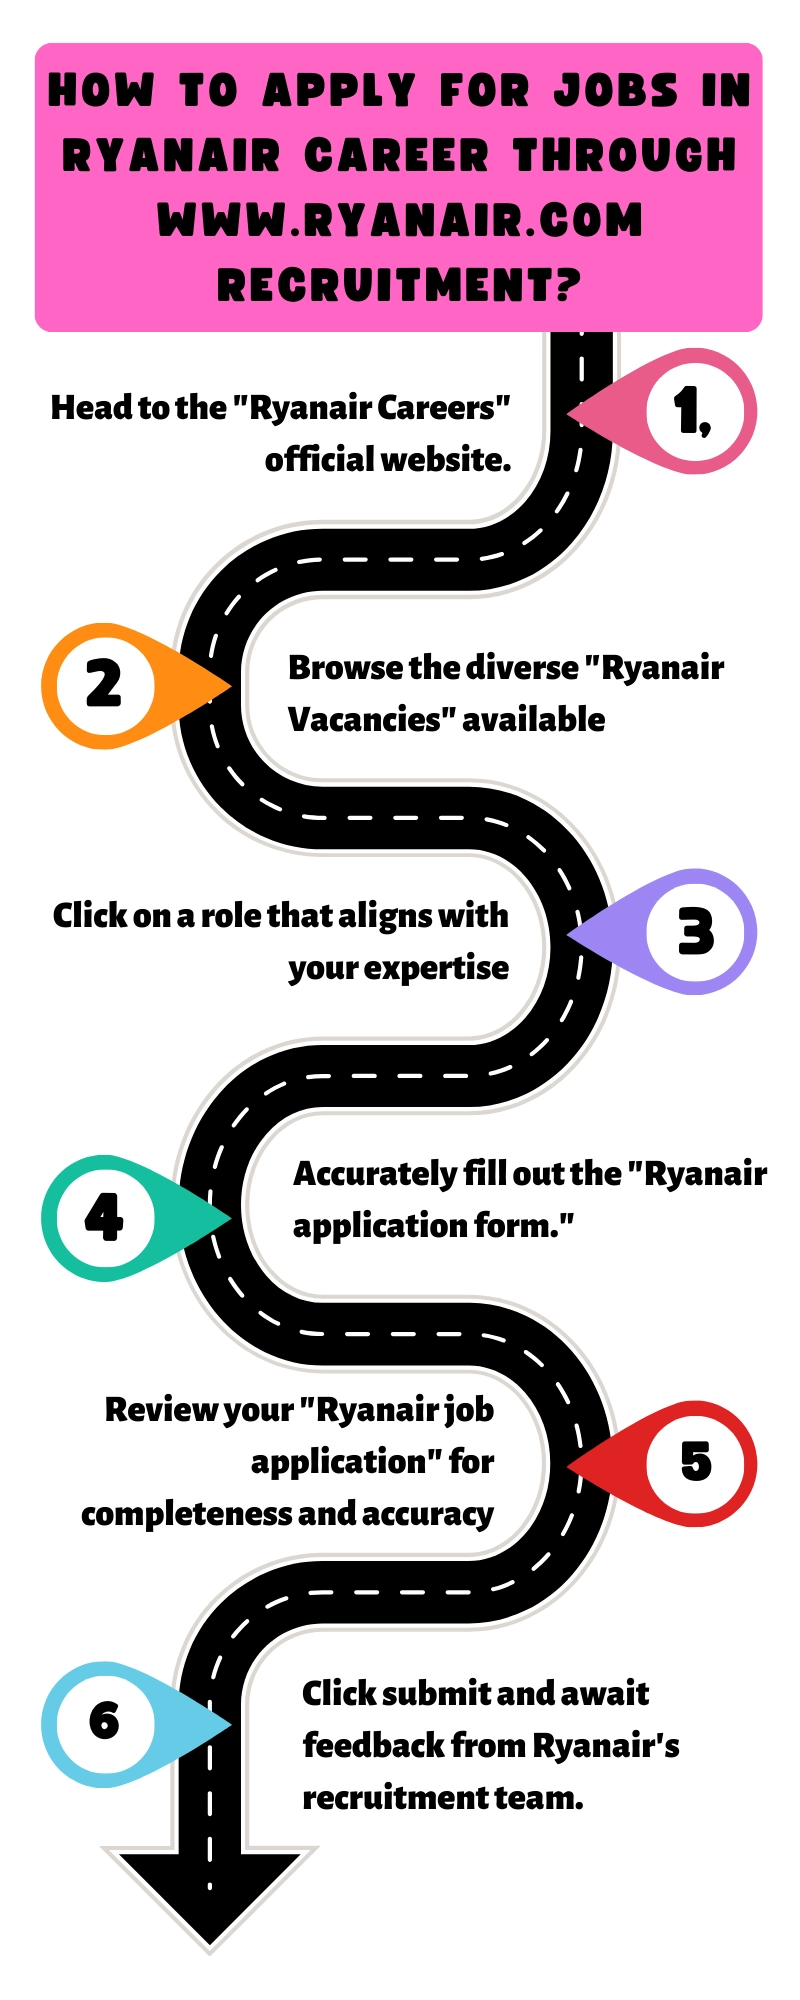 How to Apply for Jobs in Ryanair Career through www.ryanair.com recruitment?